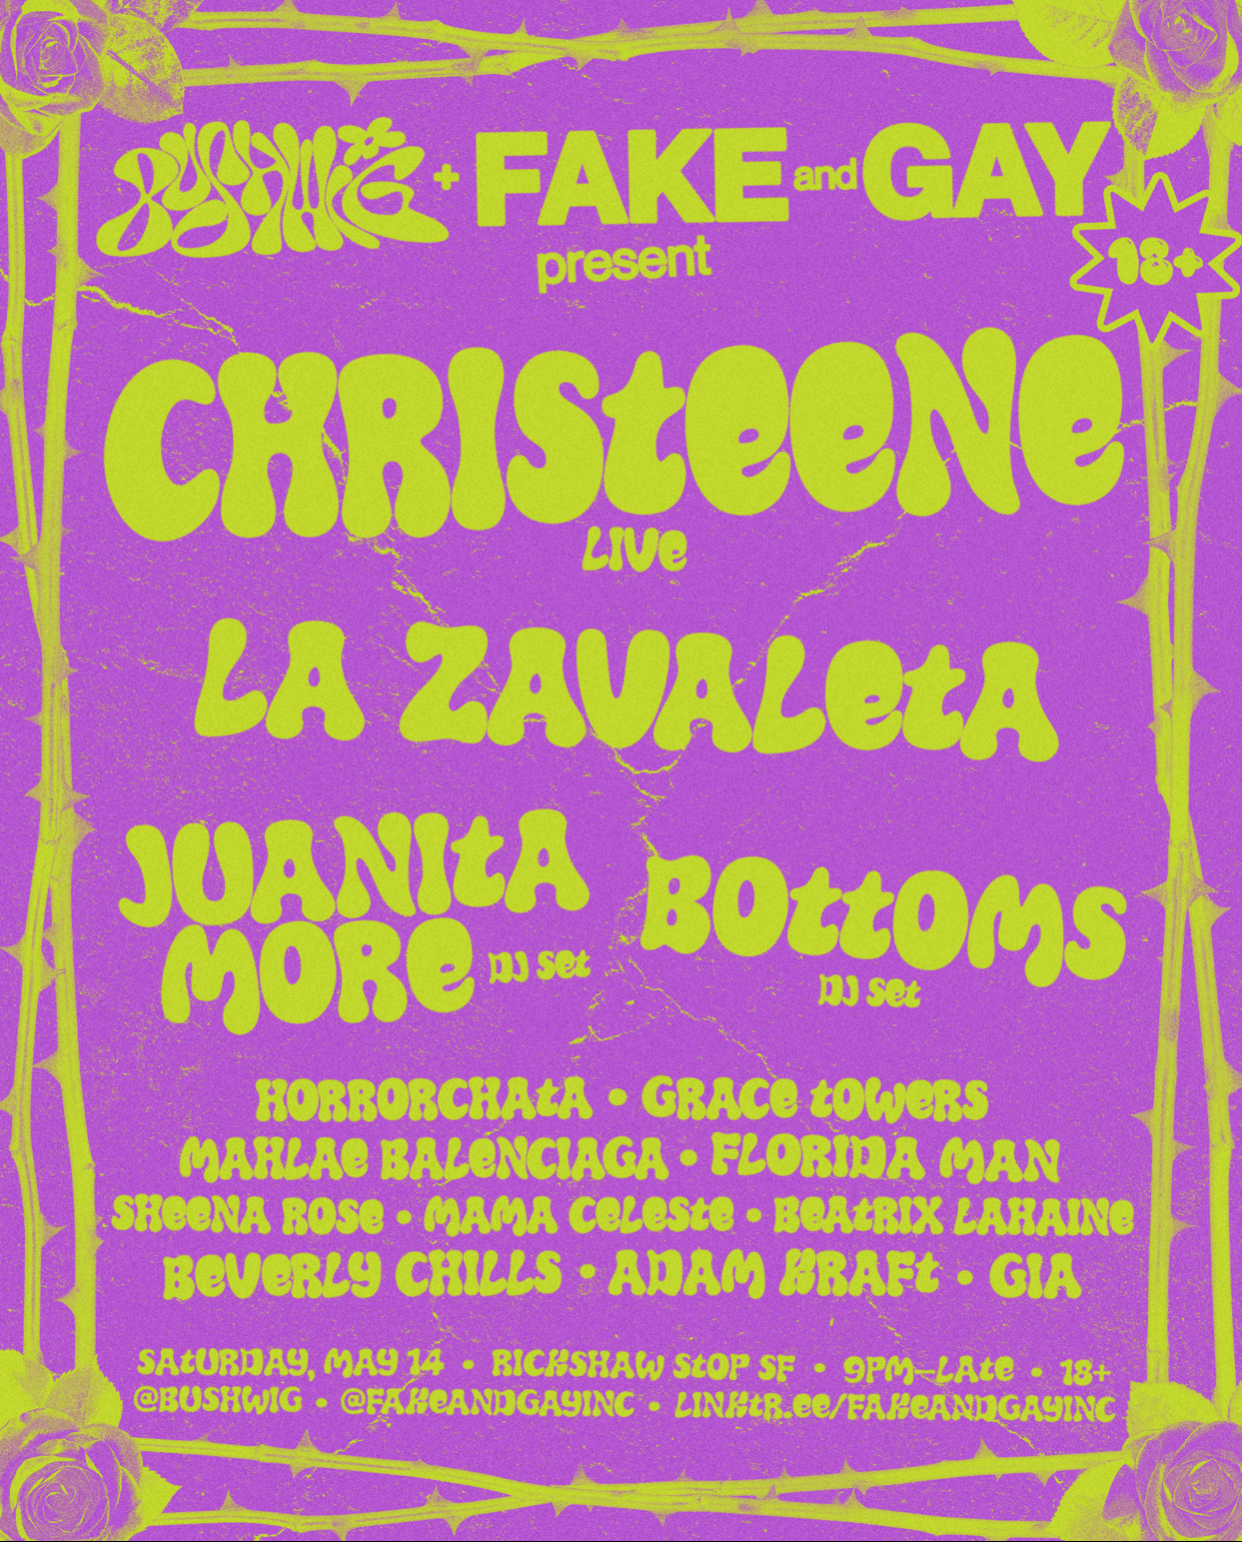 Bushwig x FAKE and GAY: Christeene (LIVE!) - Flyer front